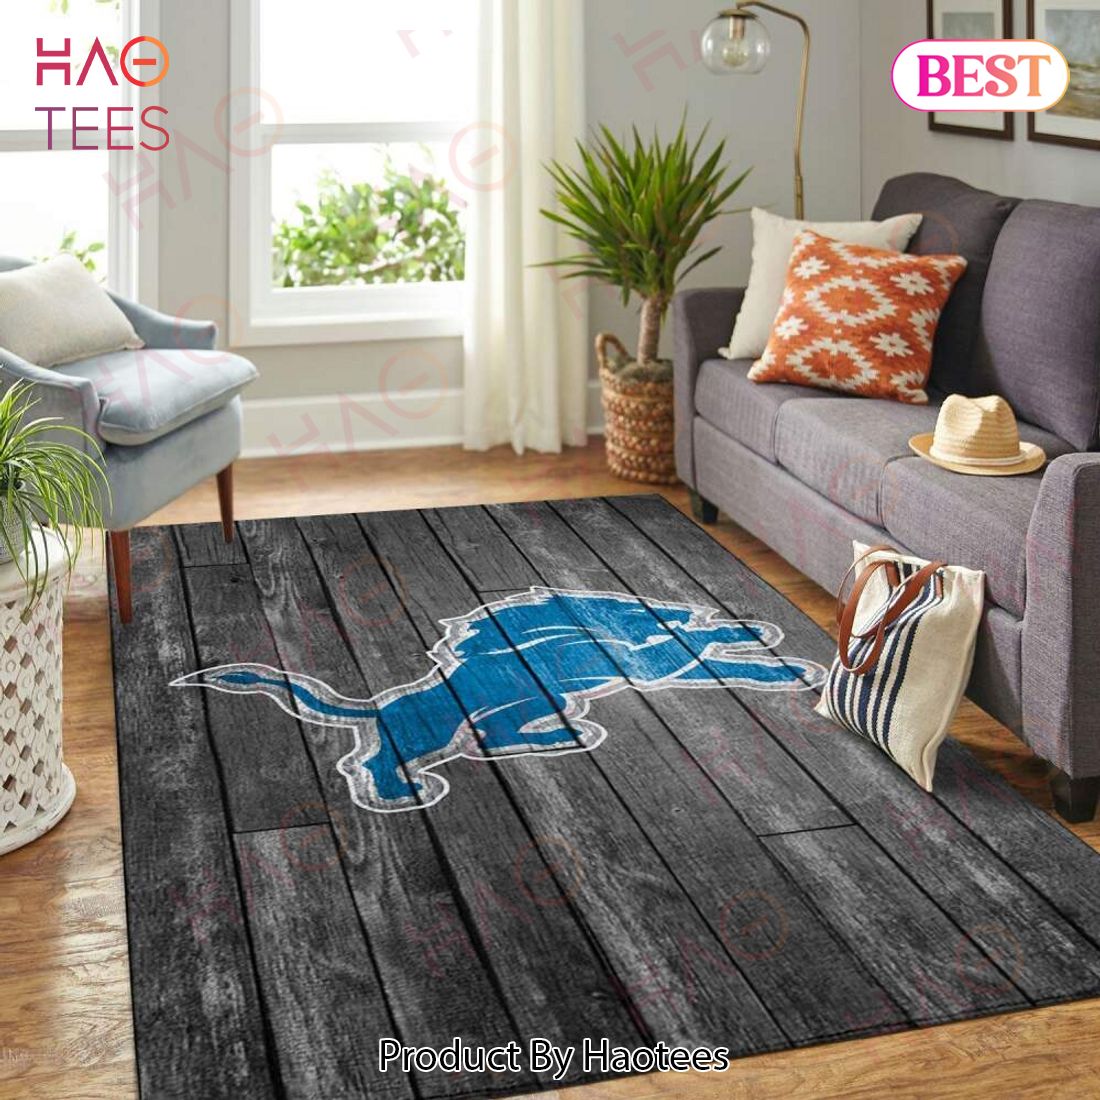 Detroit Lions Nfl Area Rugs Football Living Room Carpet Team Logo Gray Wooden Home Rug Regtangle Carpet Floor Decor Home Decor